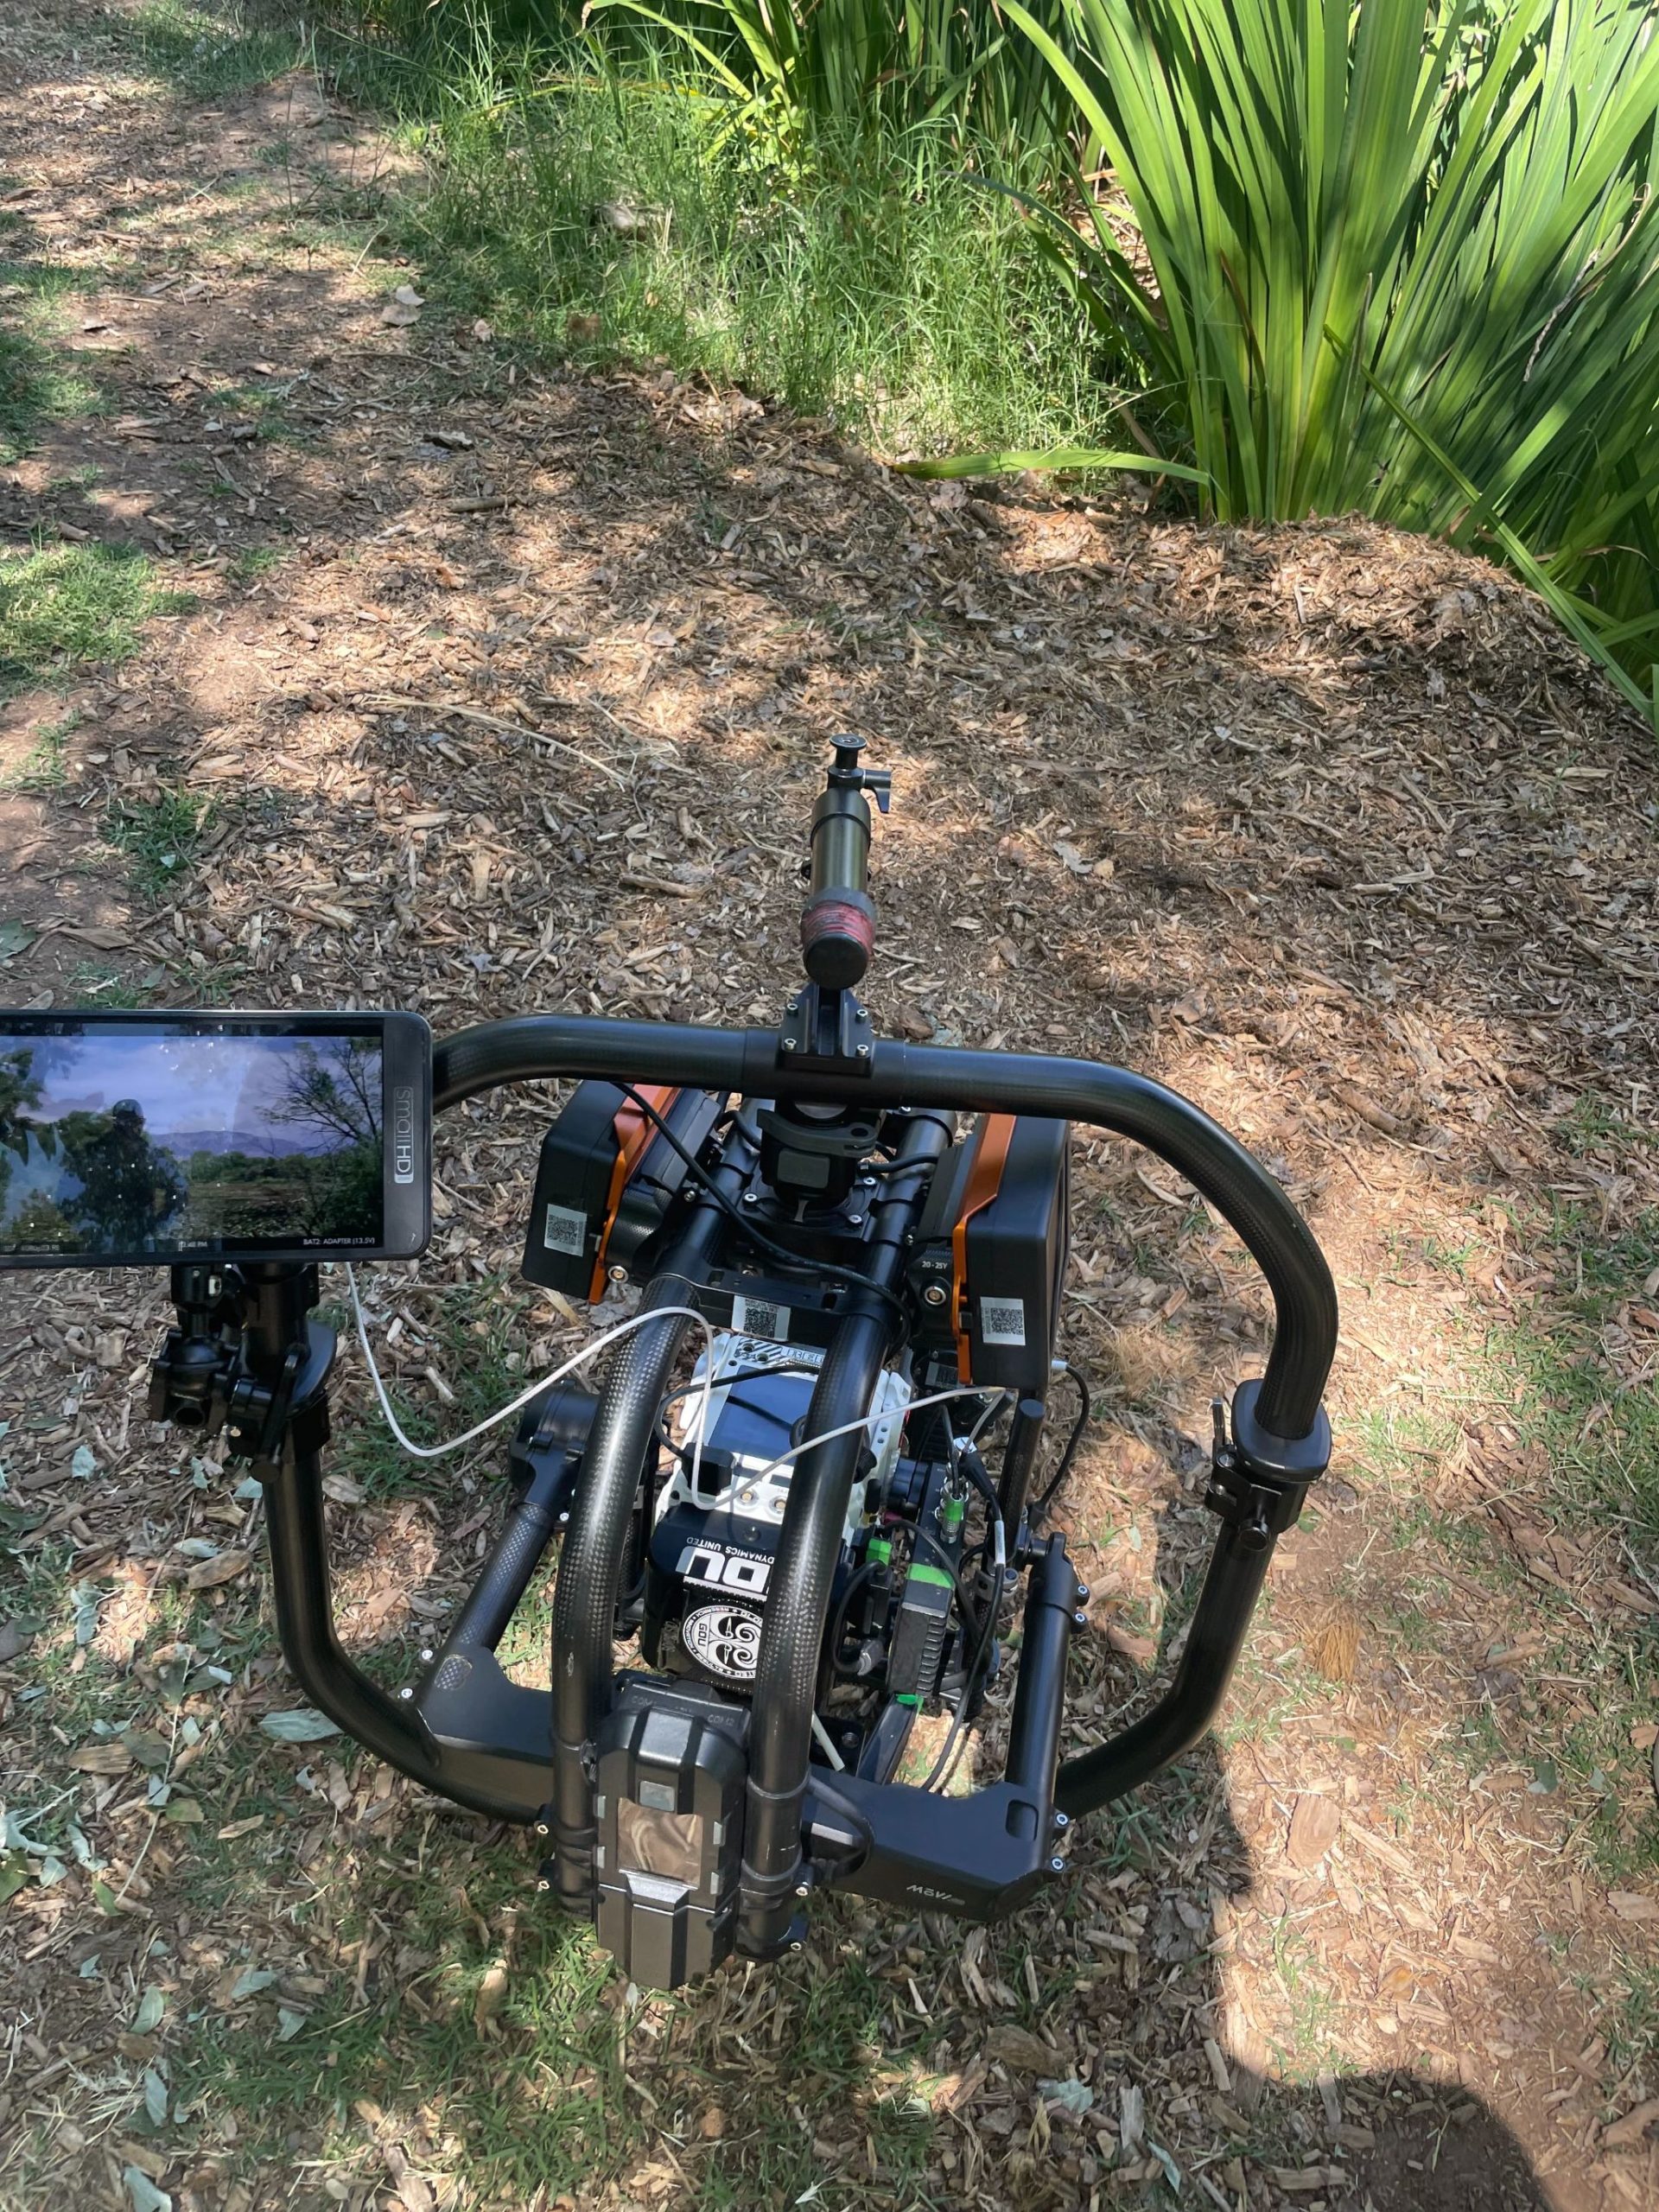 IU C&I Studios Portfolio Closeup of videographer equipment on the ground by green foliage